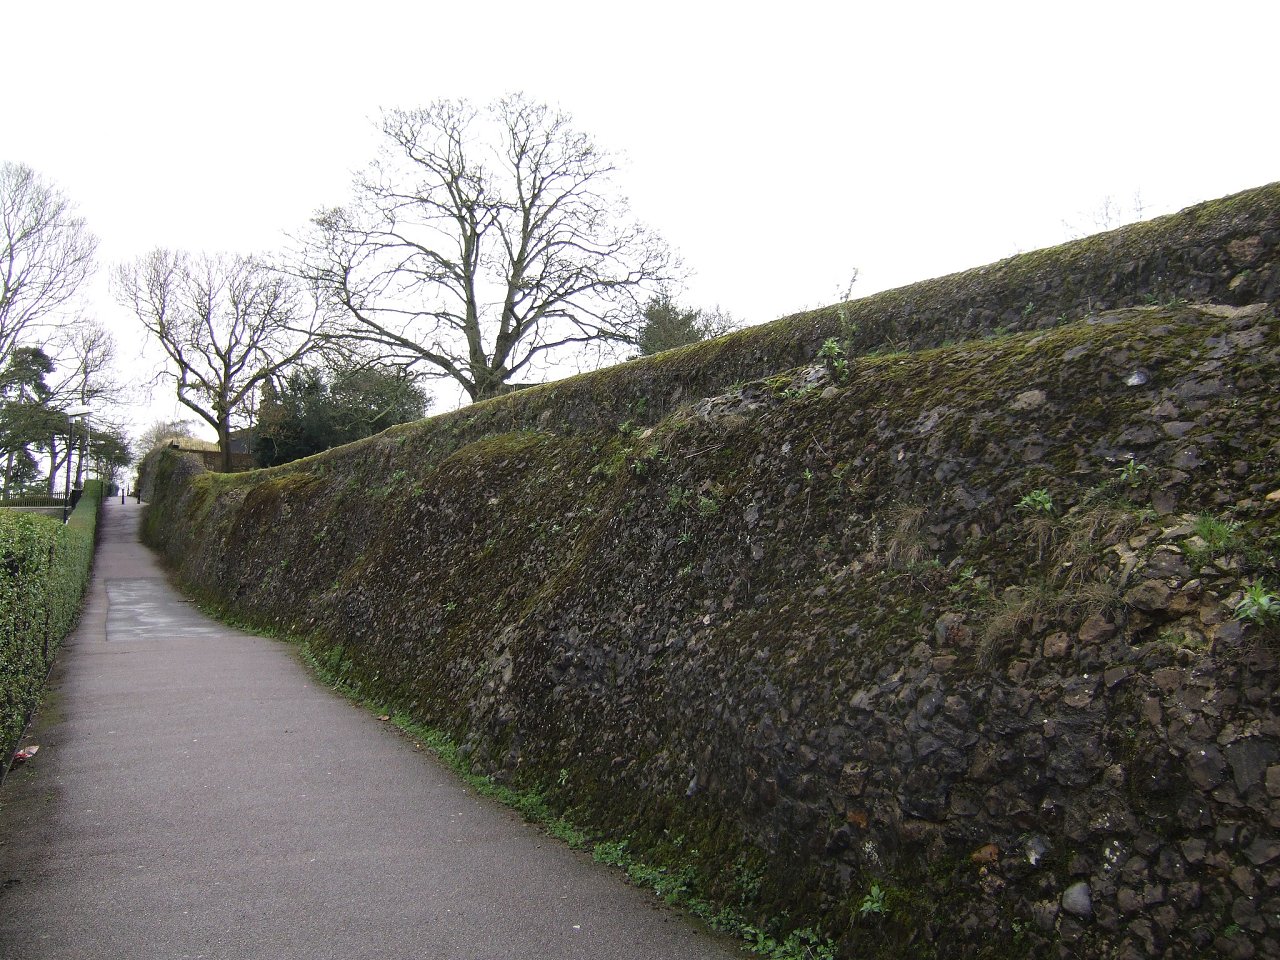 Roman Wall, Colchester, England